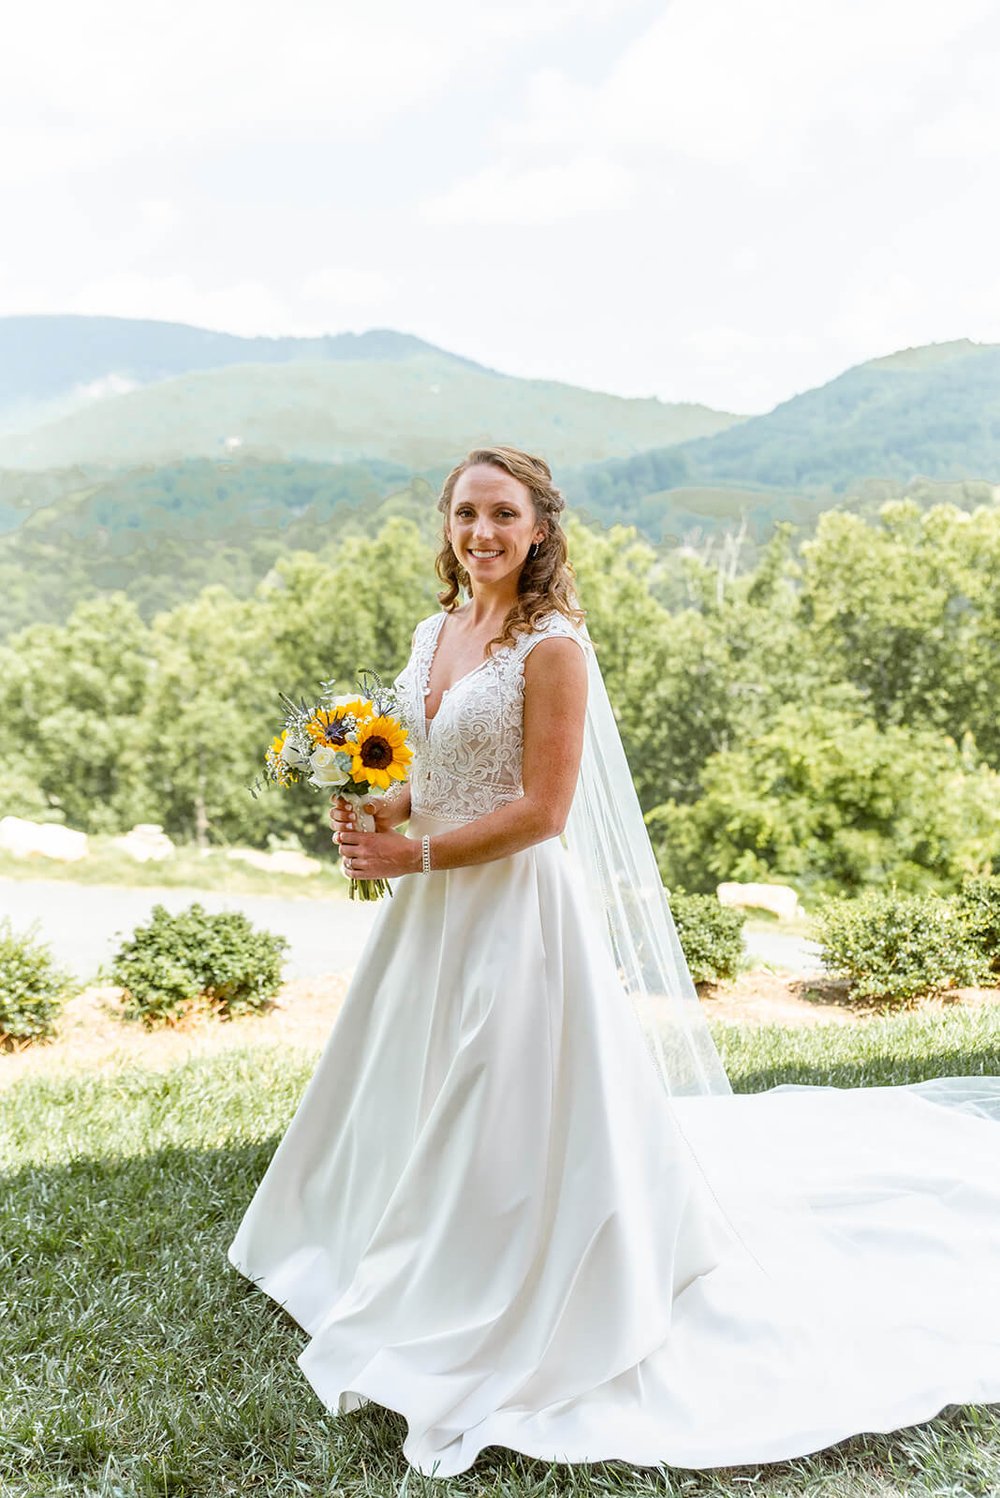 bridal portrait by nick levine photography at asheville wedding venue point lookout vineyards